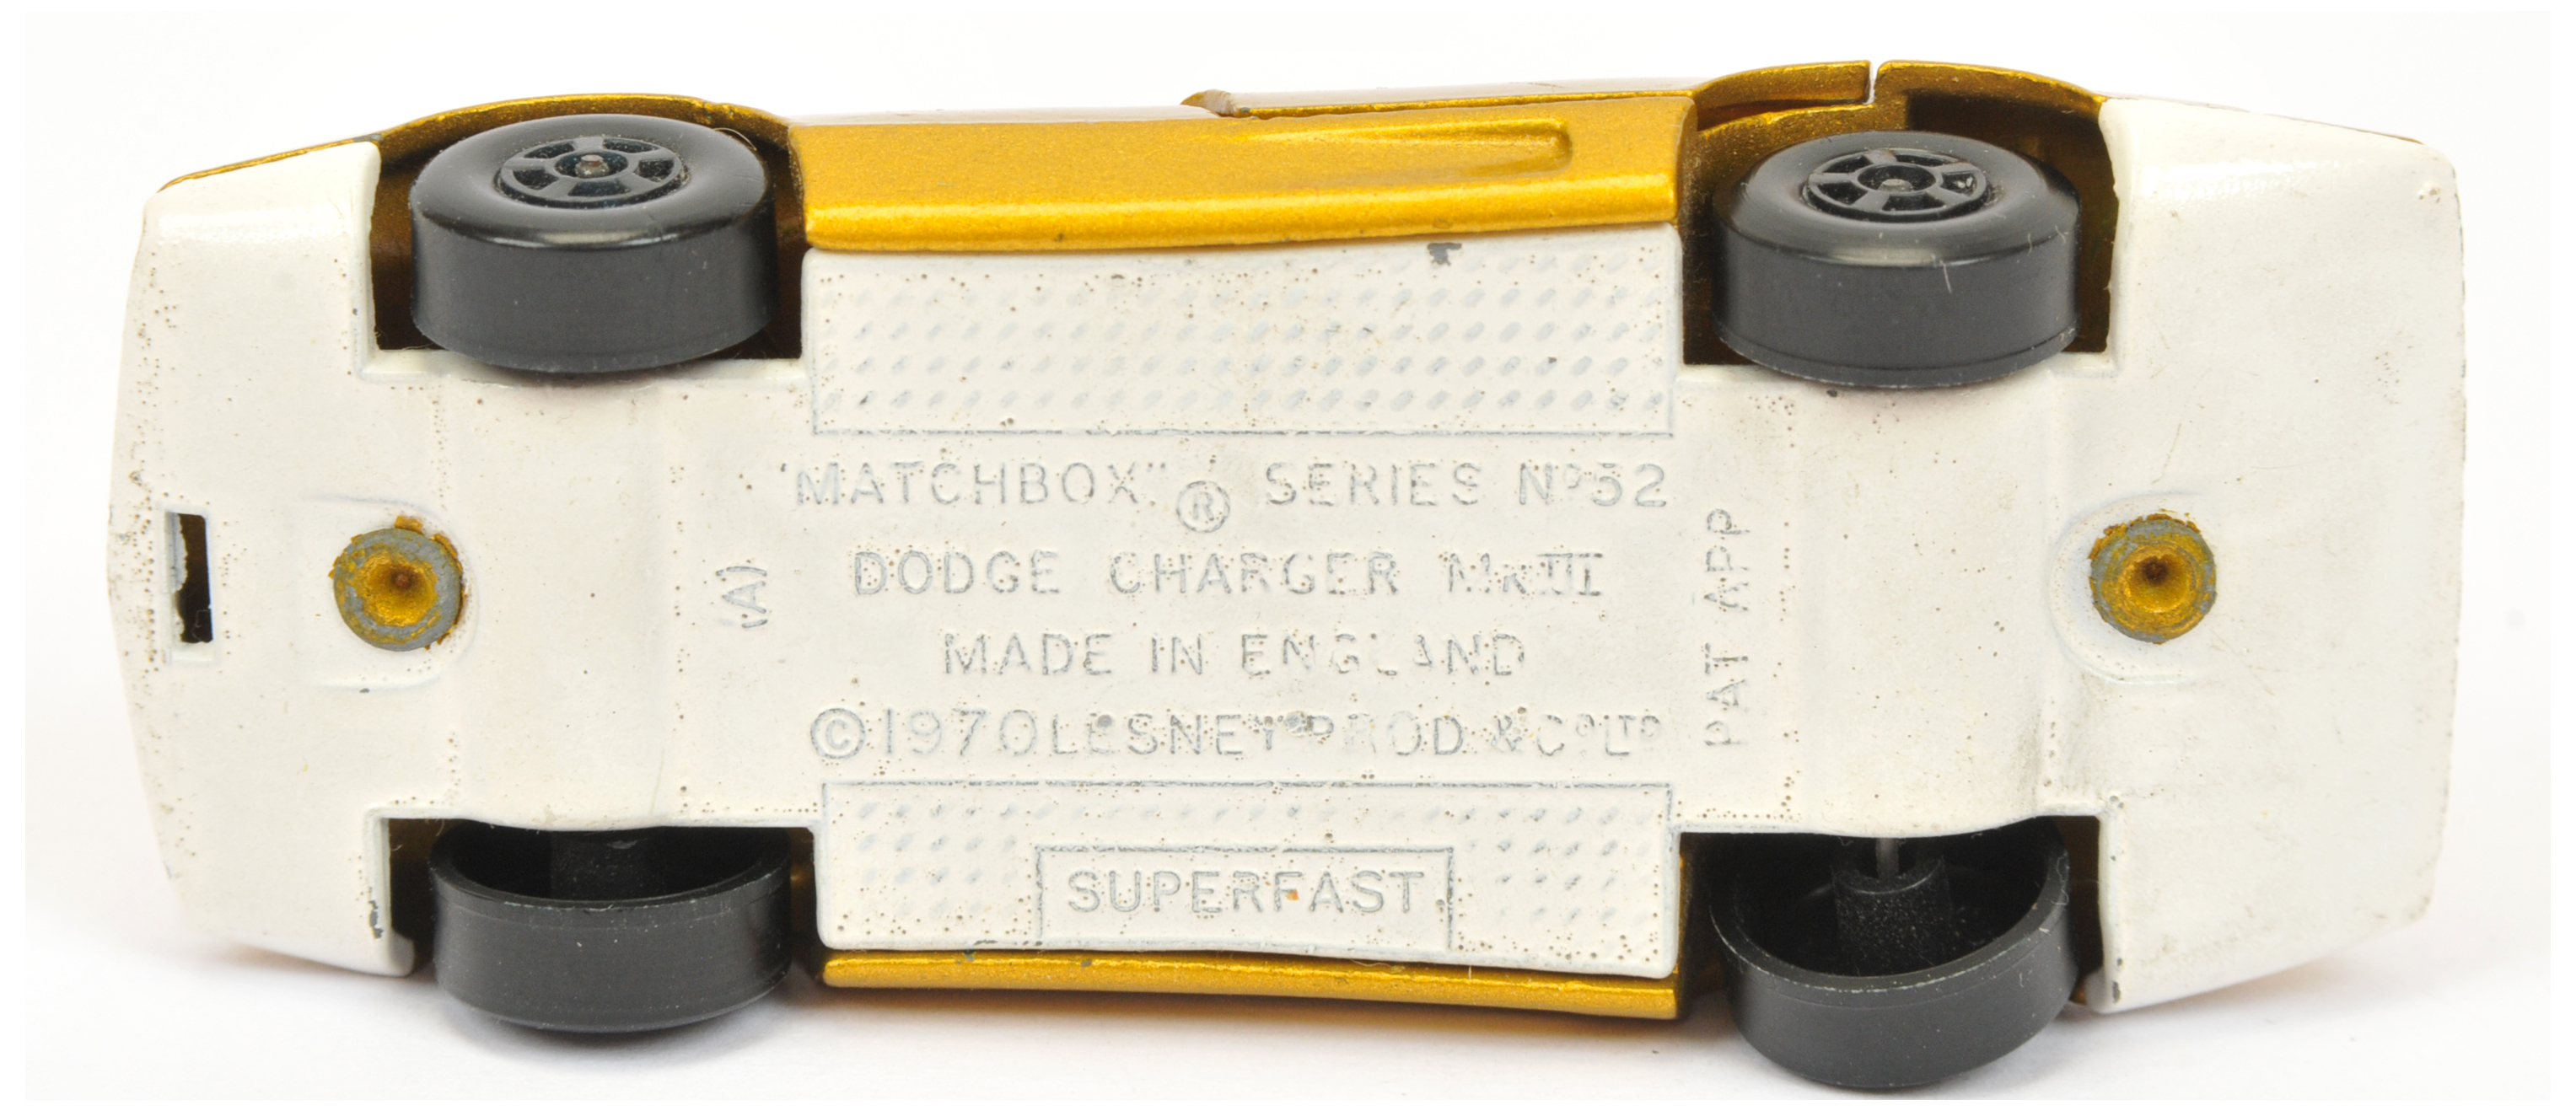 Matchbox Superfast 52a Dodge Charger Factory Pre-production Colour Trial model - metallic gold bo... - Bild 3 aus 3